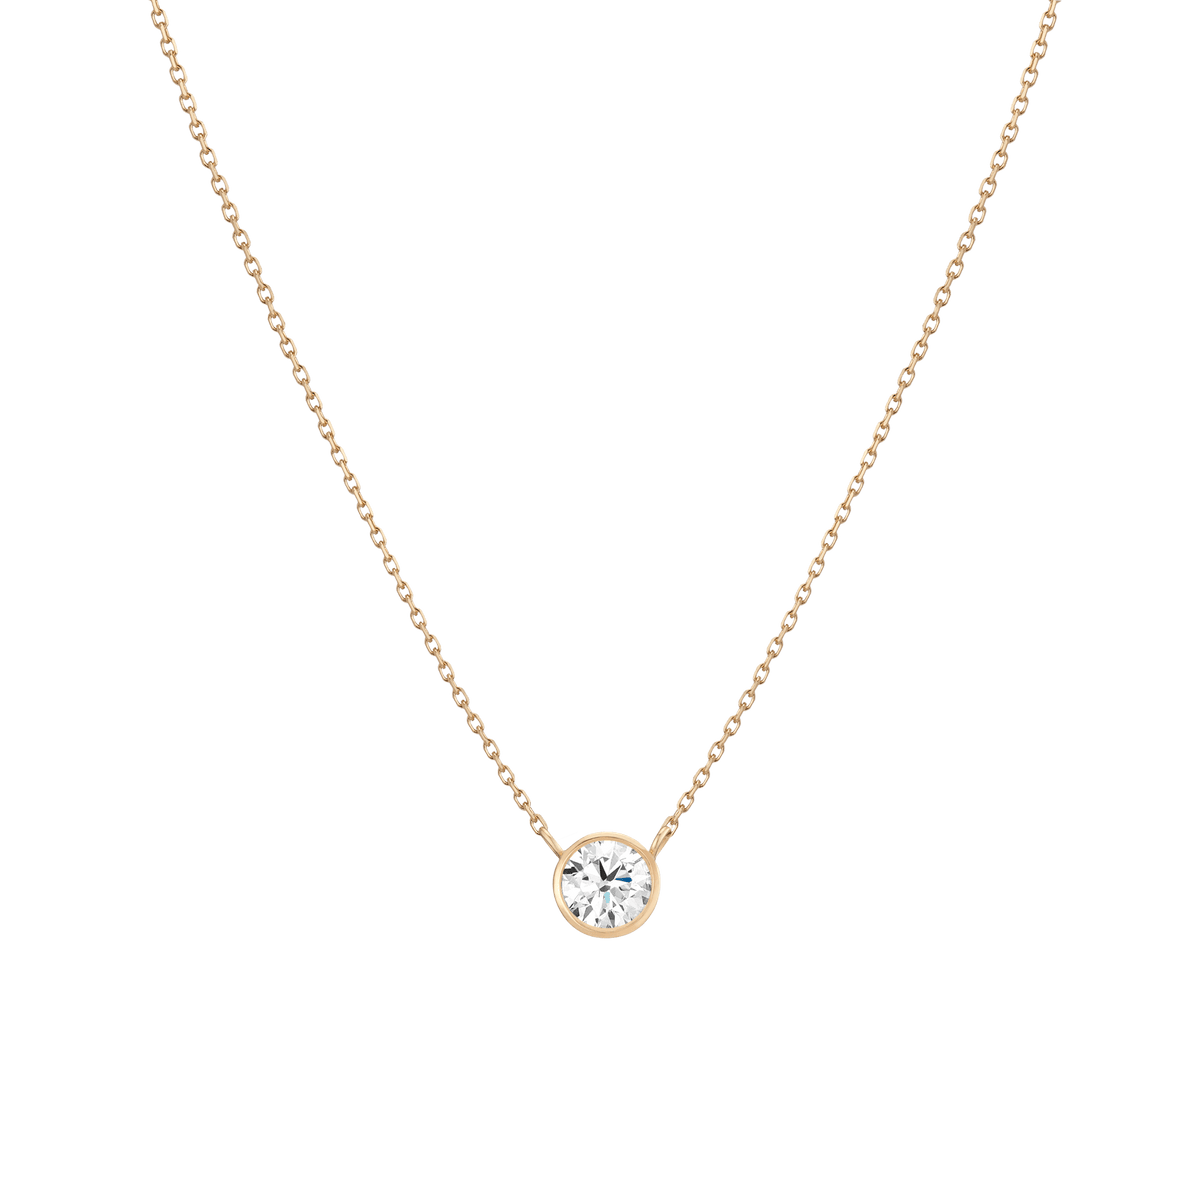 Bezel Set Diamond Necklace - 9987UDAADFGNKWG – Droste's Jewelry Shoppes